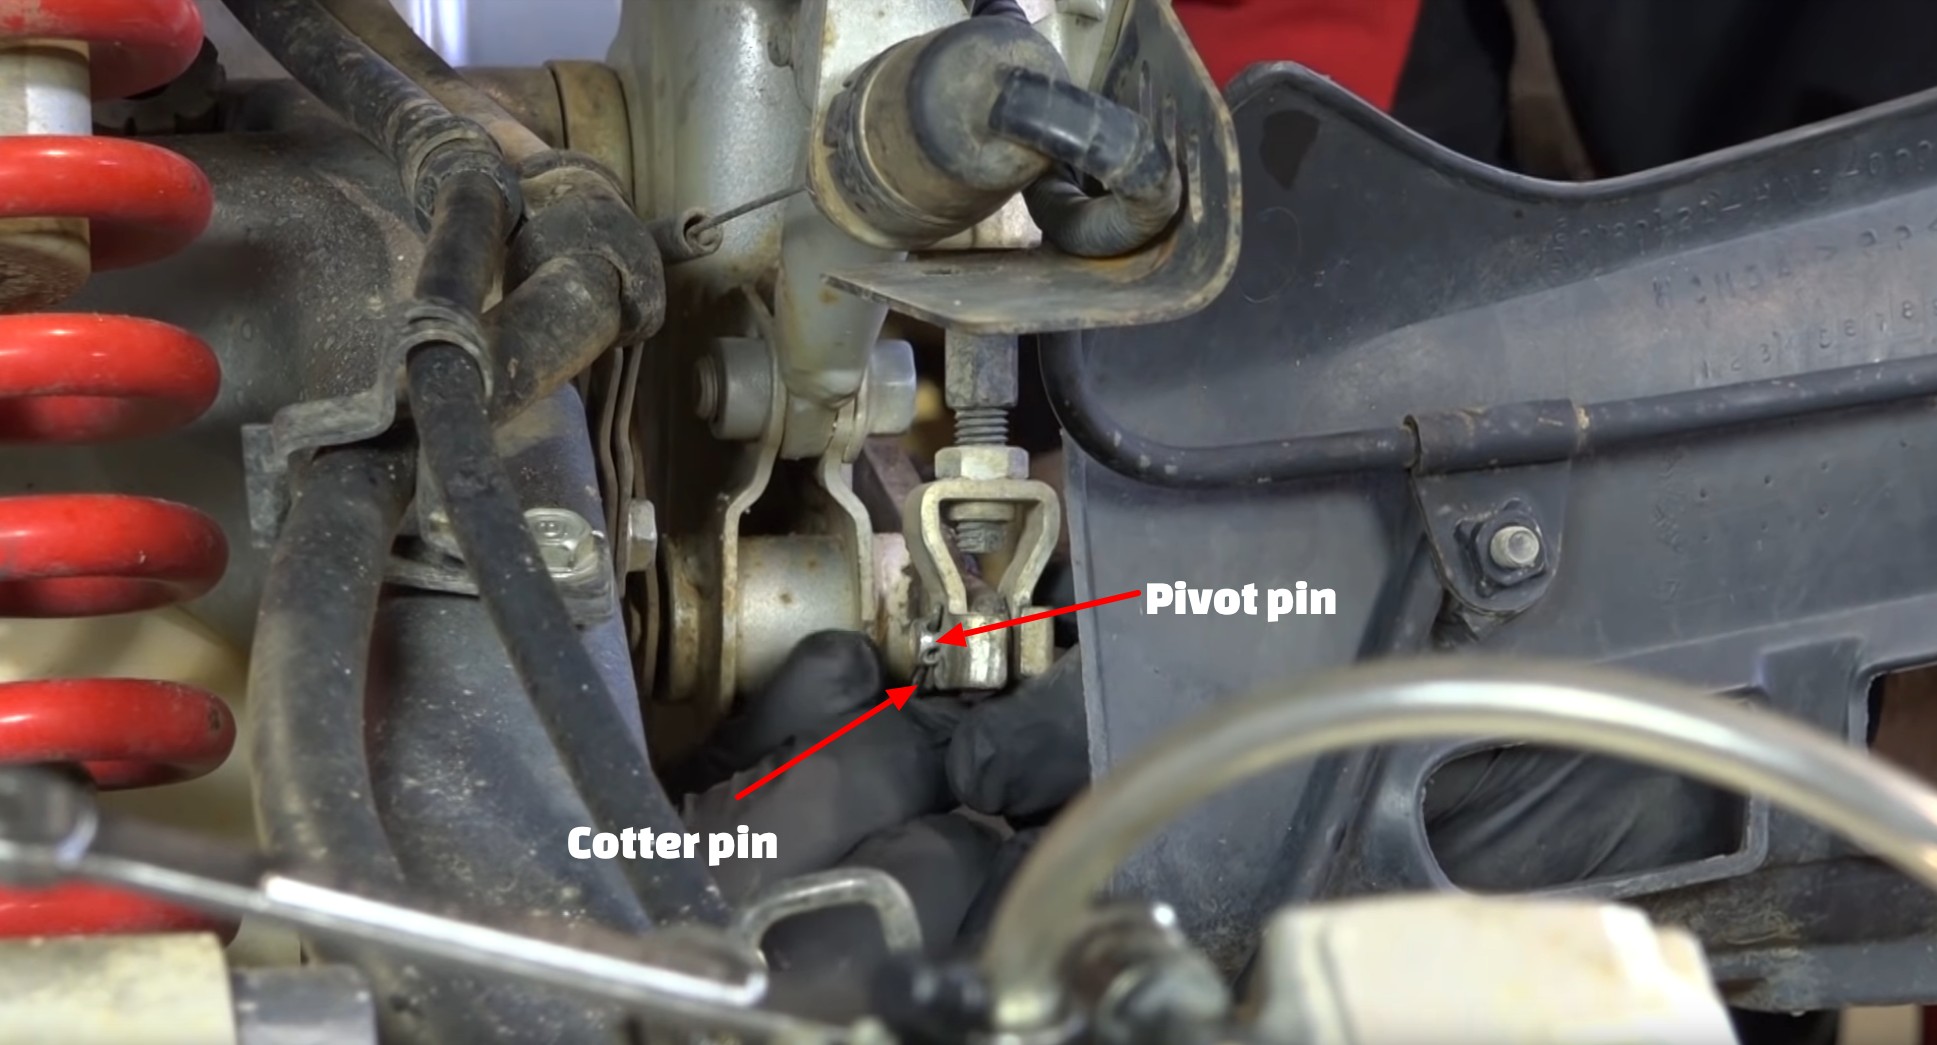 Honda TRX 400 rear brake pedal